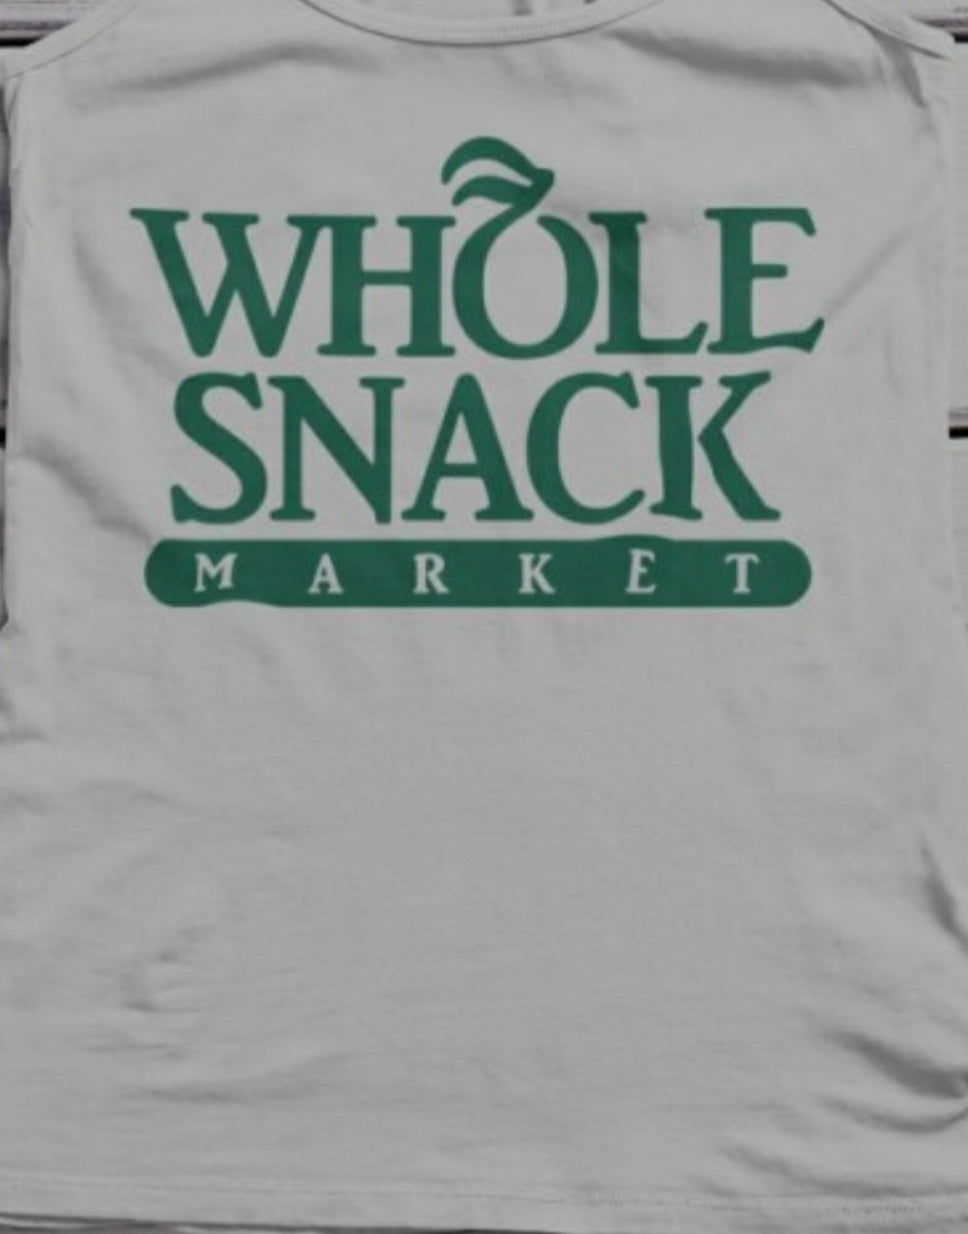 Whole Snack Market